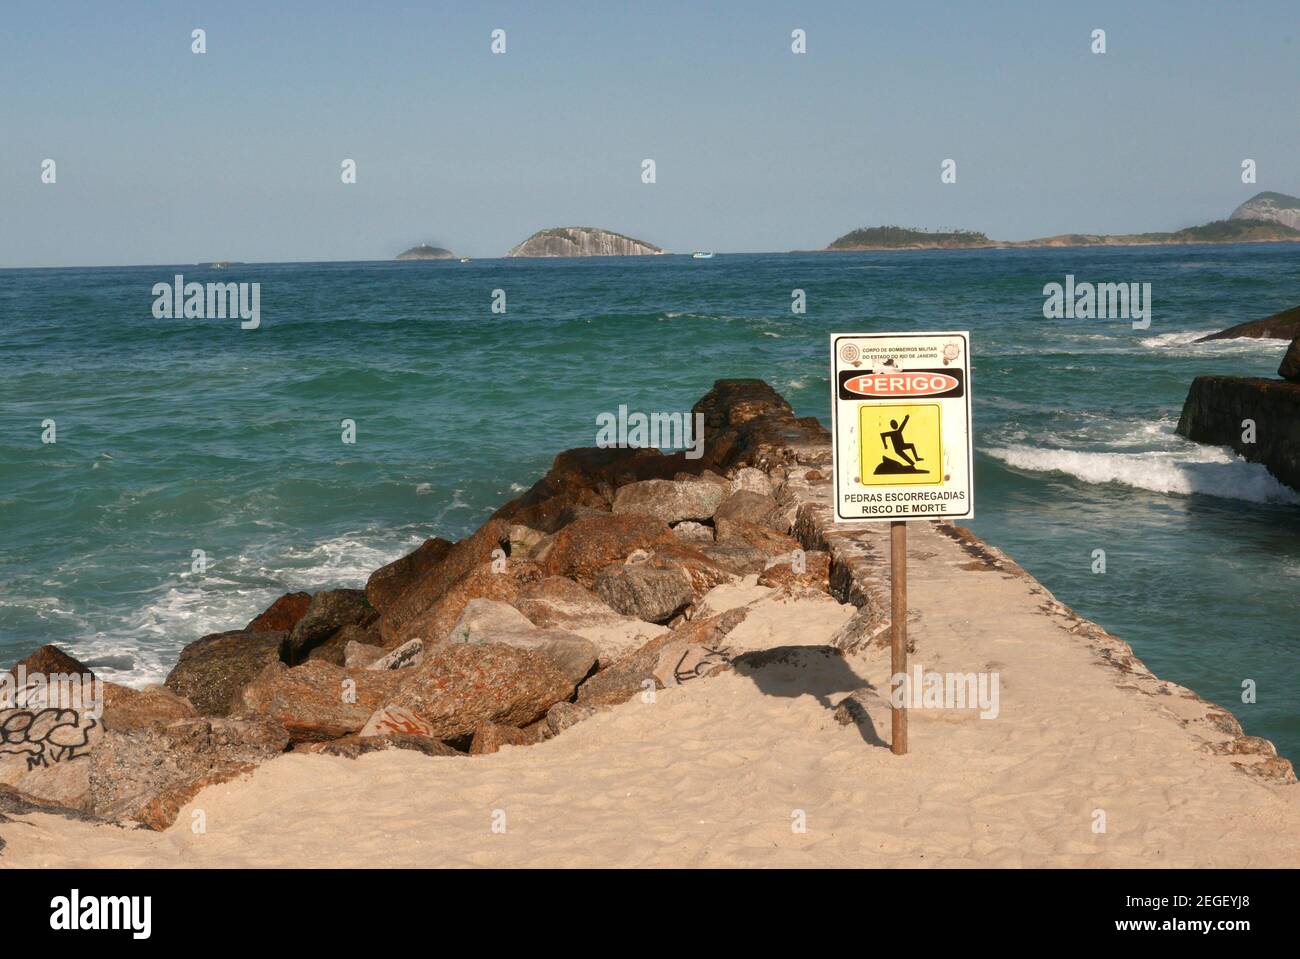 Warning sign on the rocky waterfront in Leblon Rio de Janeiro Brazil. Stock Photo